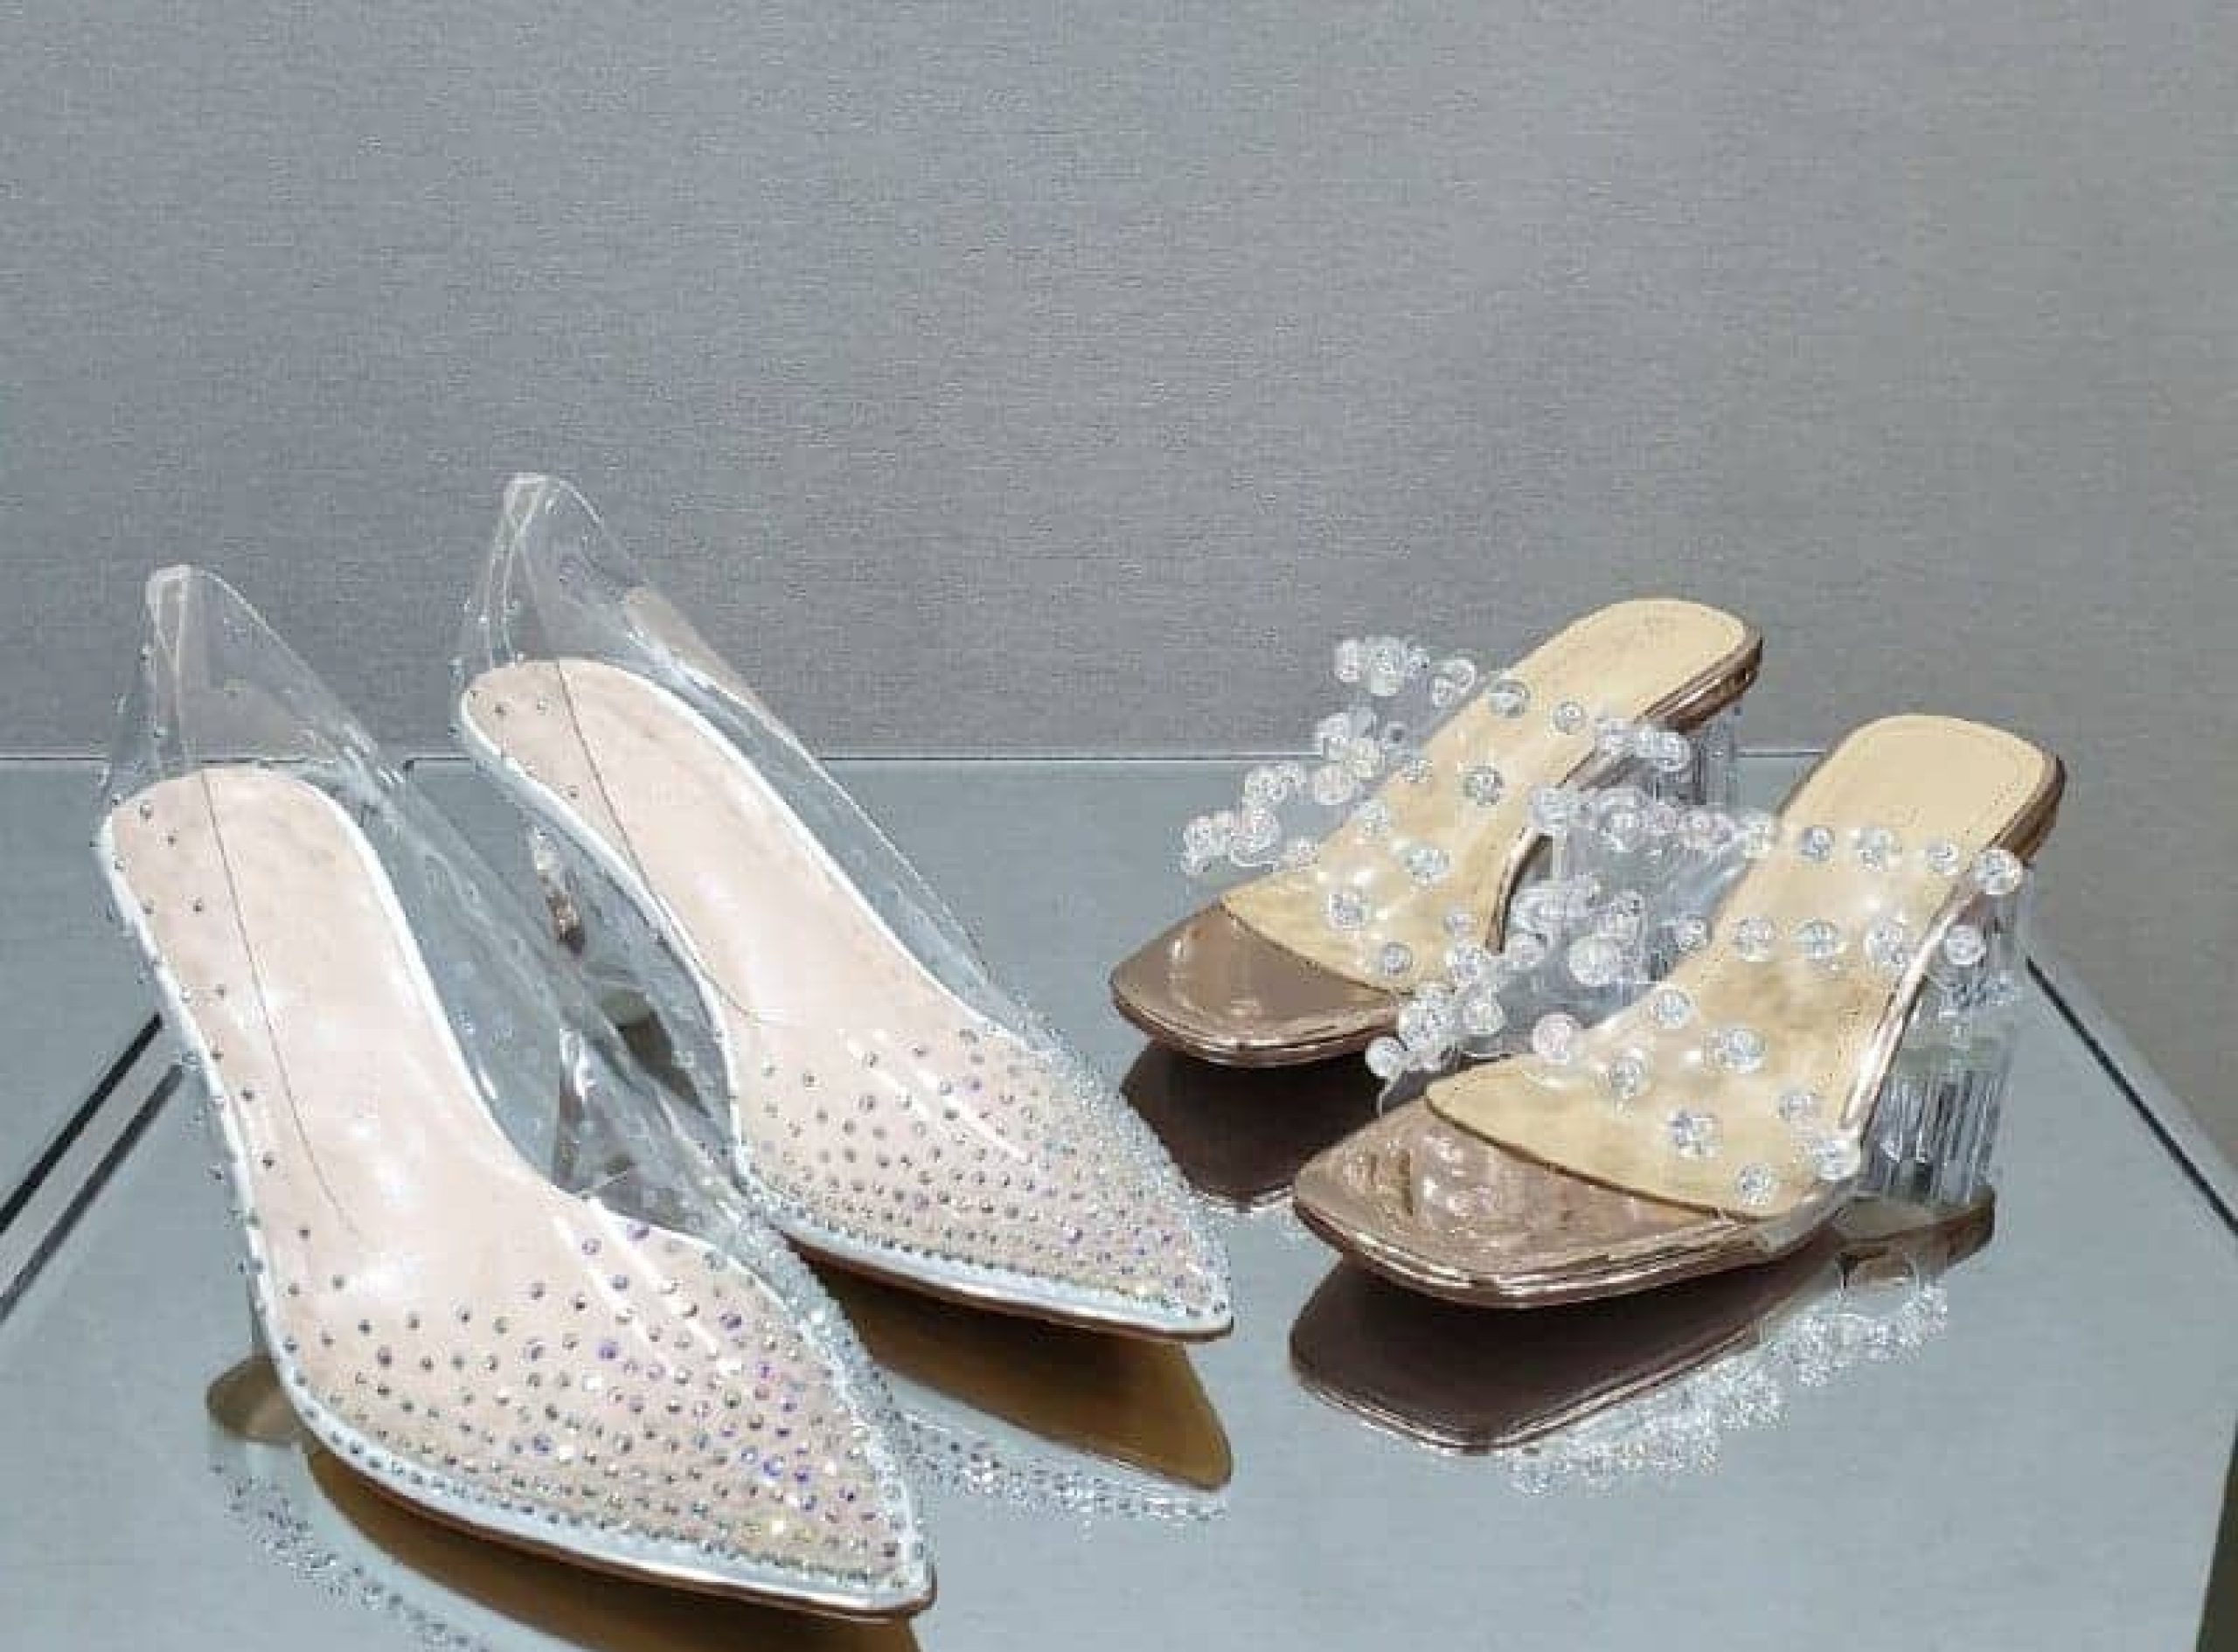 Gerobok_kasot Cinderella Shoes